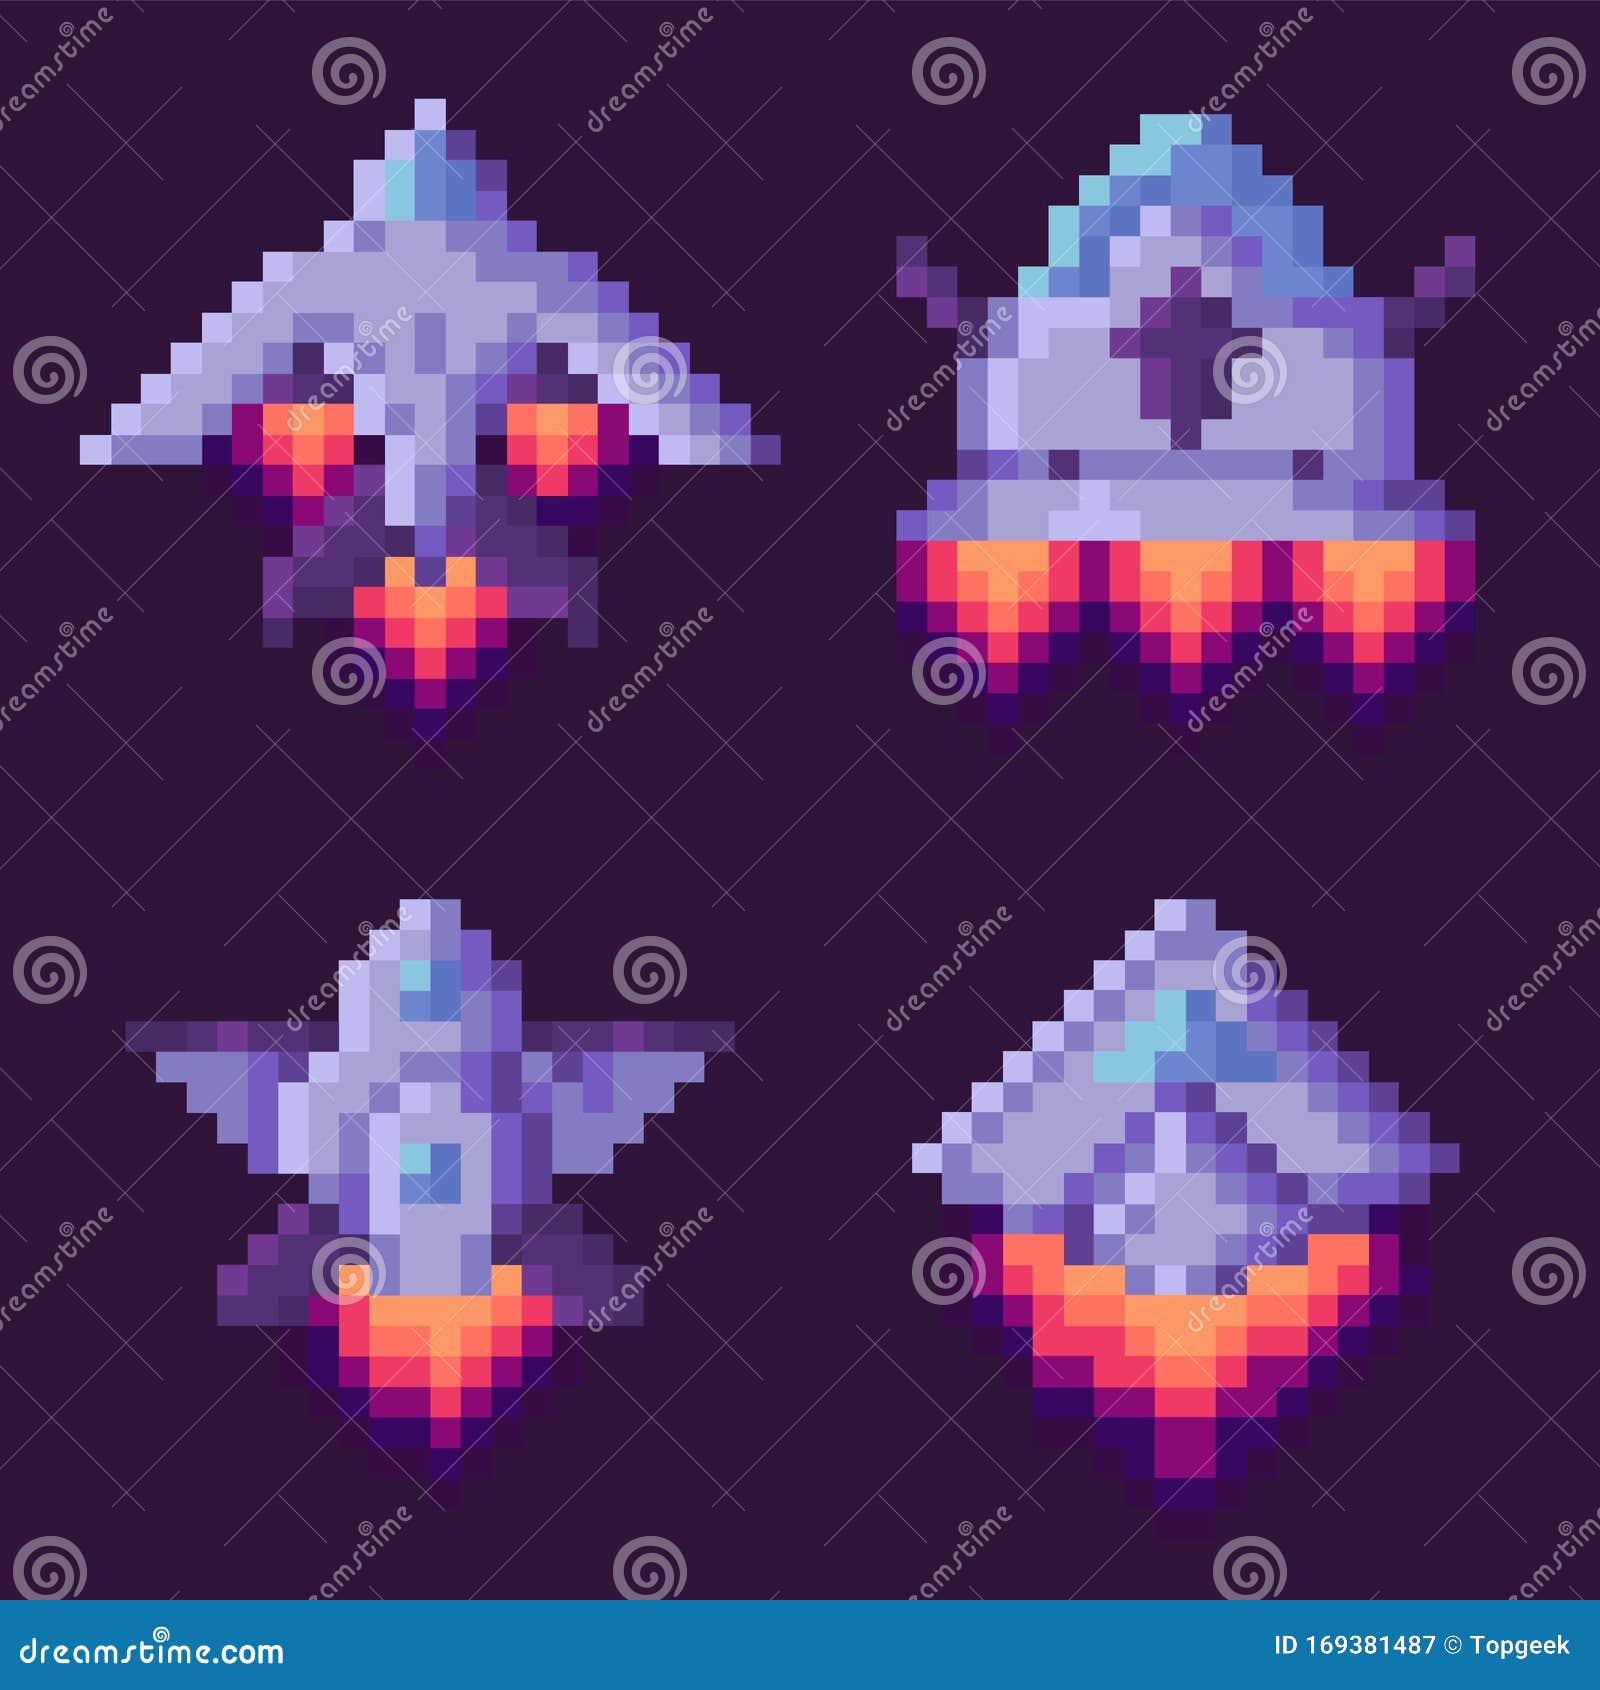 Conjunto De Elementos De Pixel Art Para O Jogo De Guerra Espacial